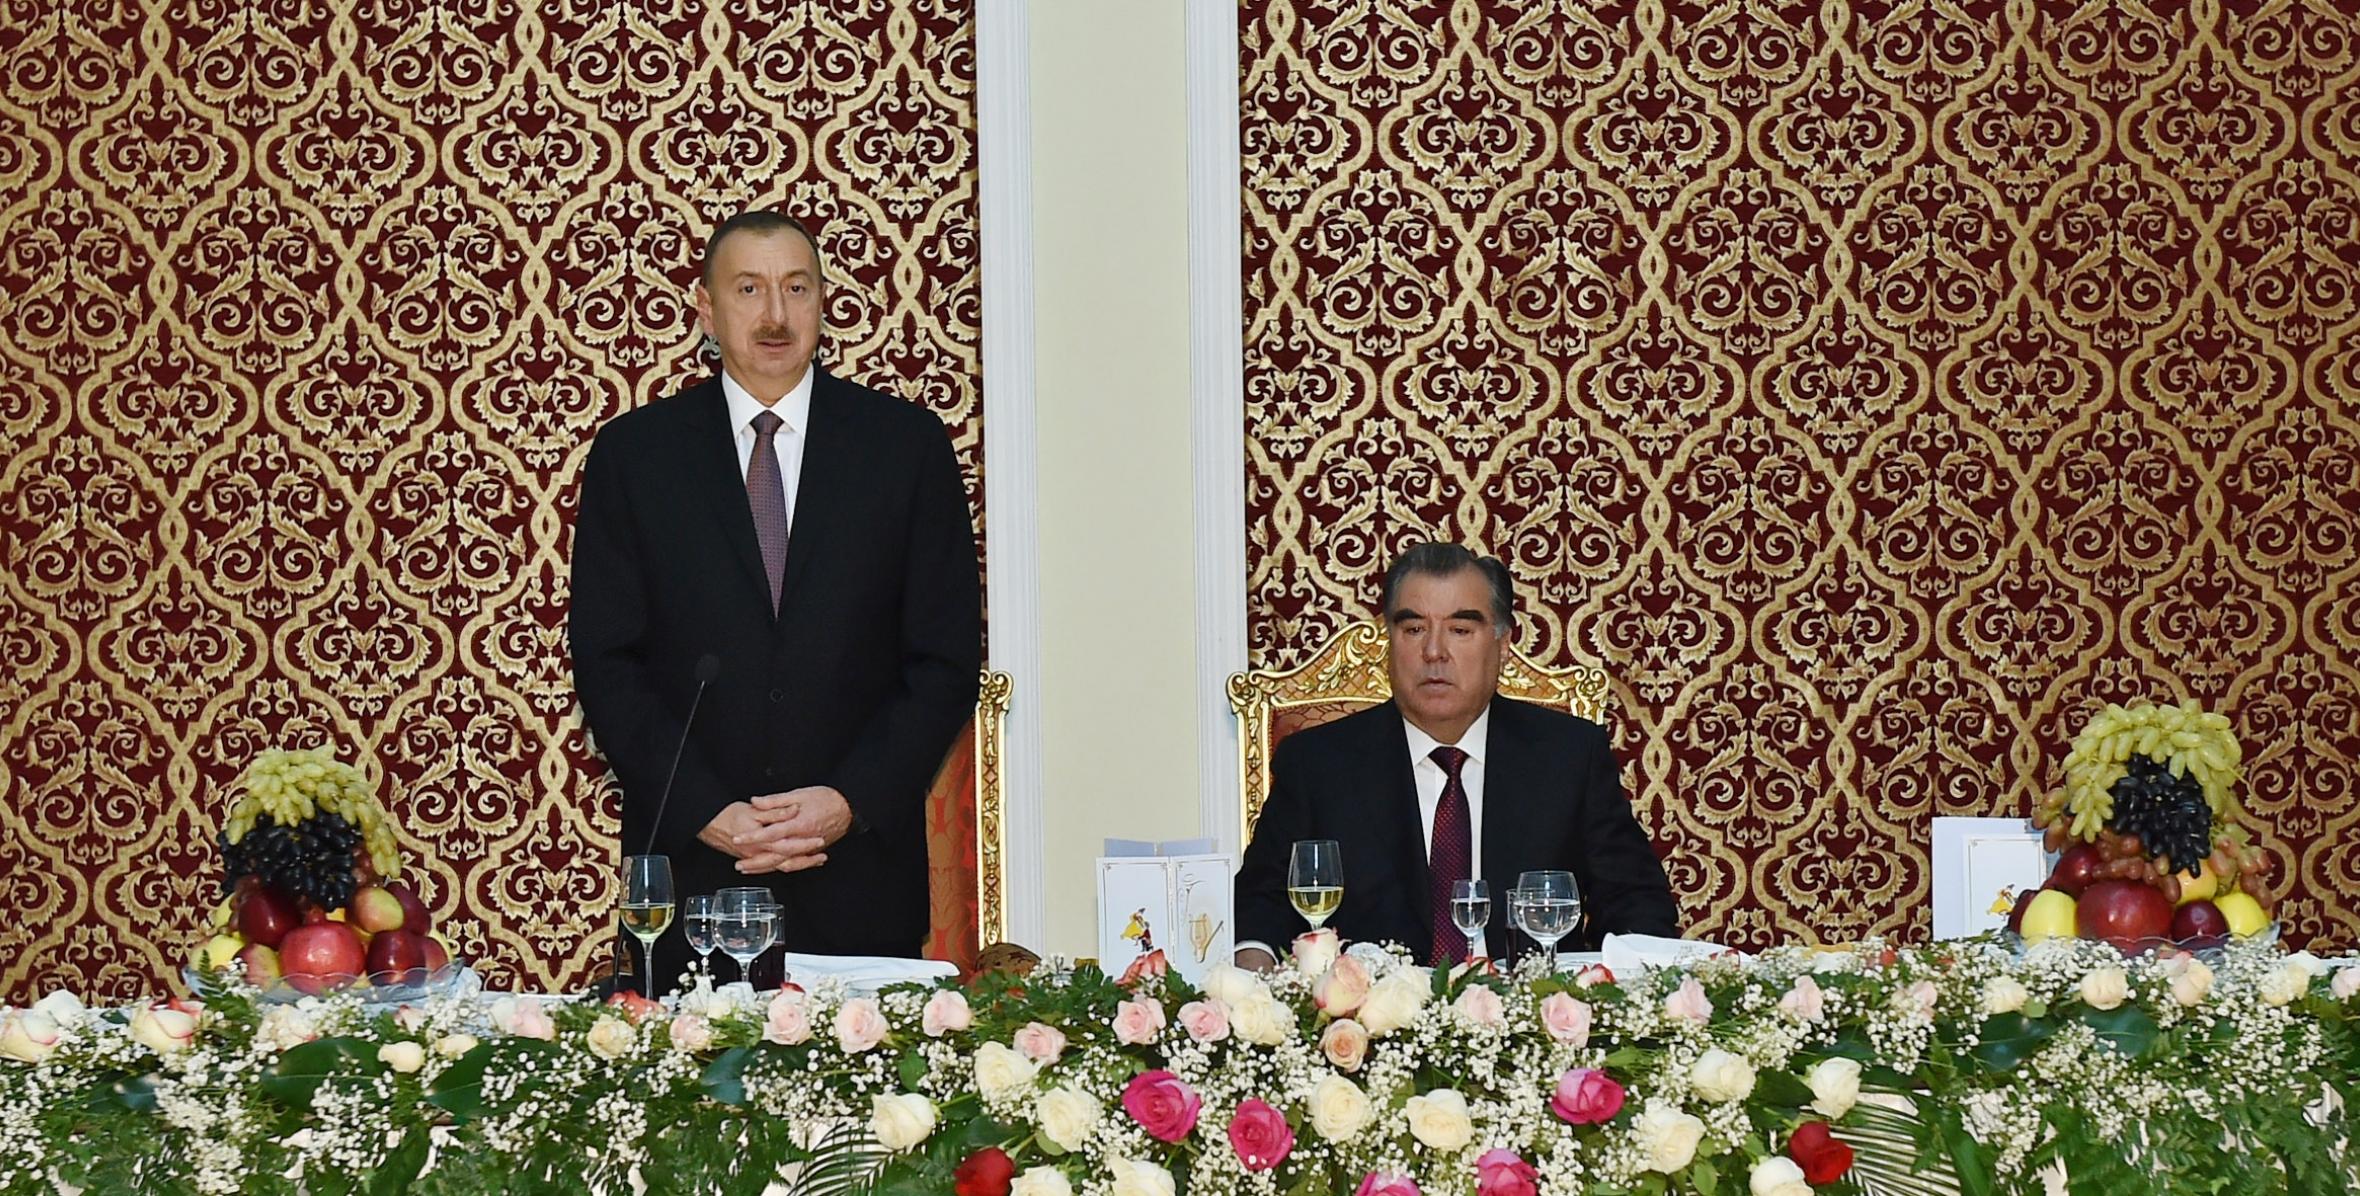 Official dinner reception was hosted on behalf of Tajik President Emomali Rahmon in honor of Ilham Aliyev